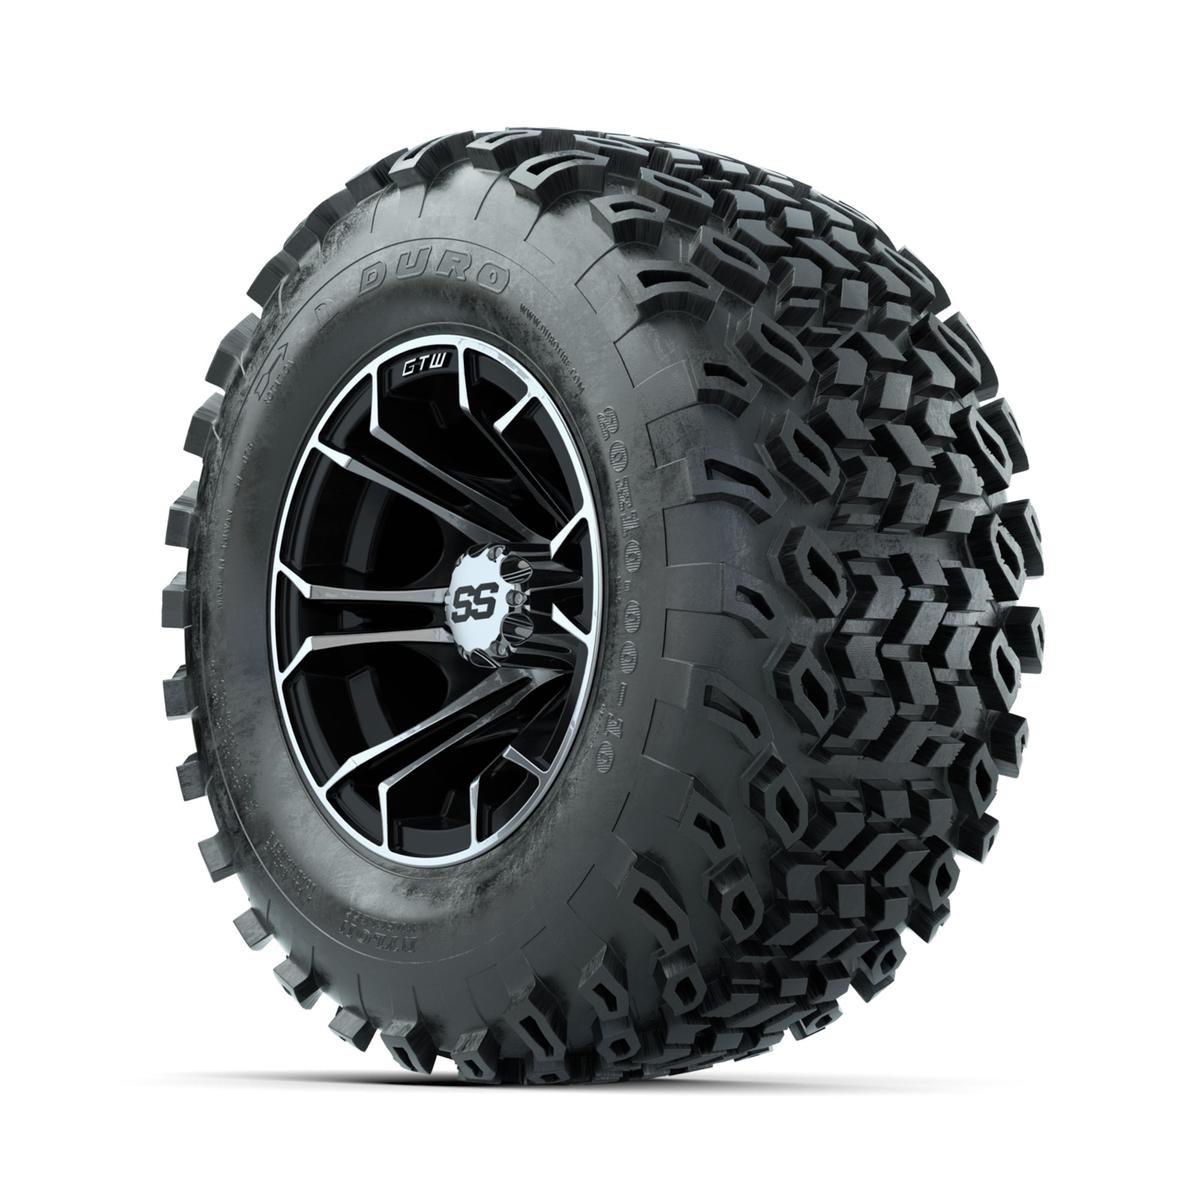 GTW Spyder Machined/Black 10 in Wheels with 20x10-10 Duro Desert All Terrain Tires – Full Set